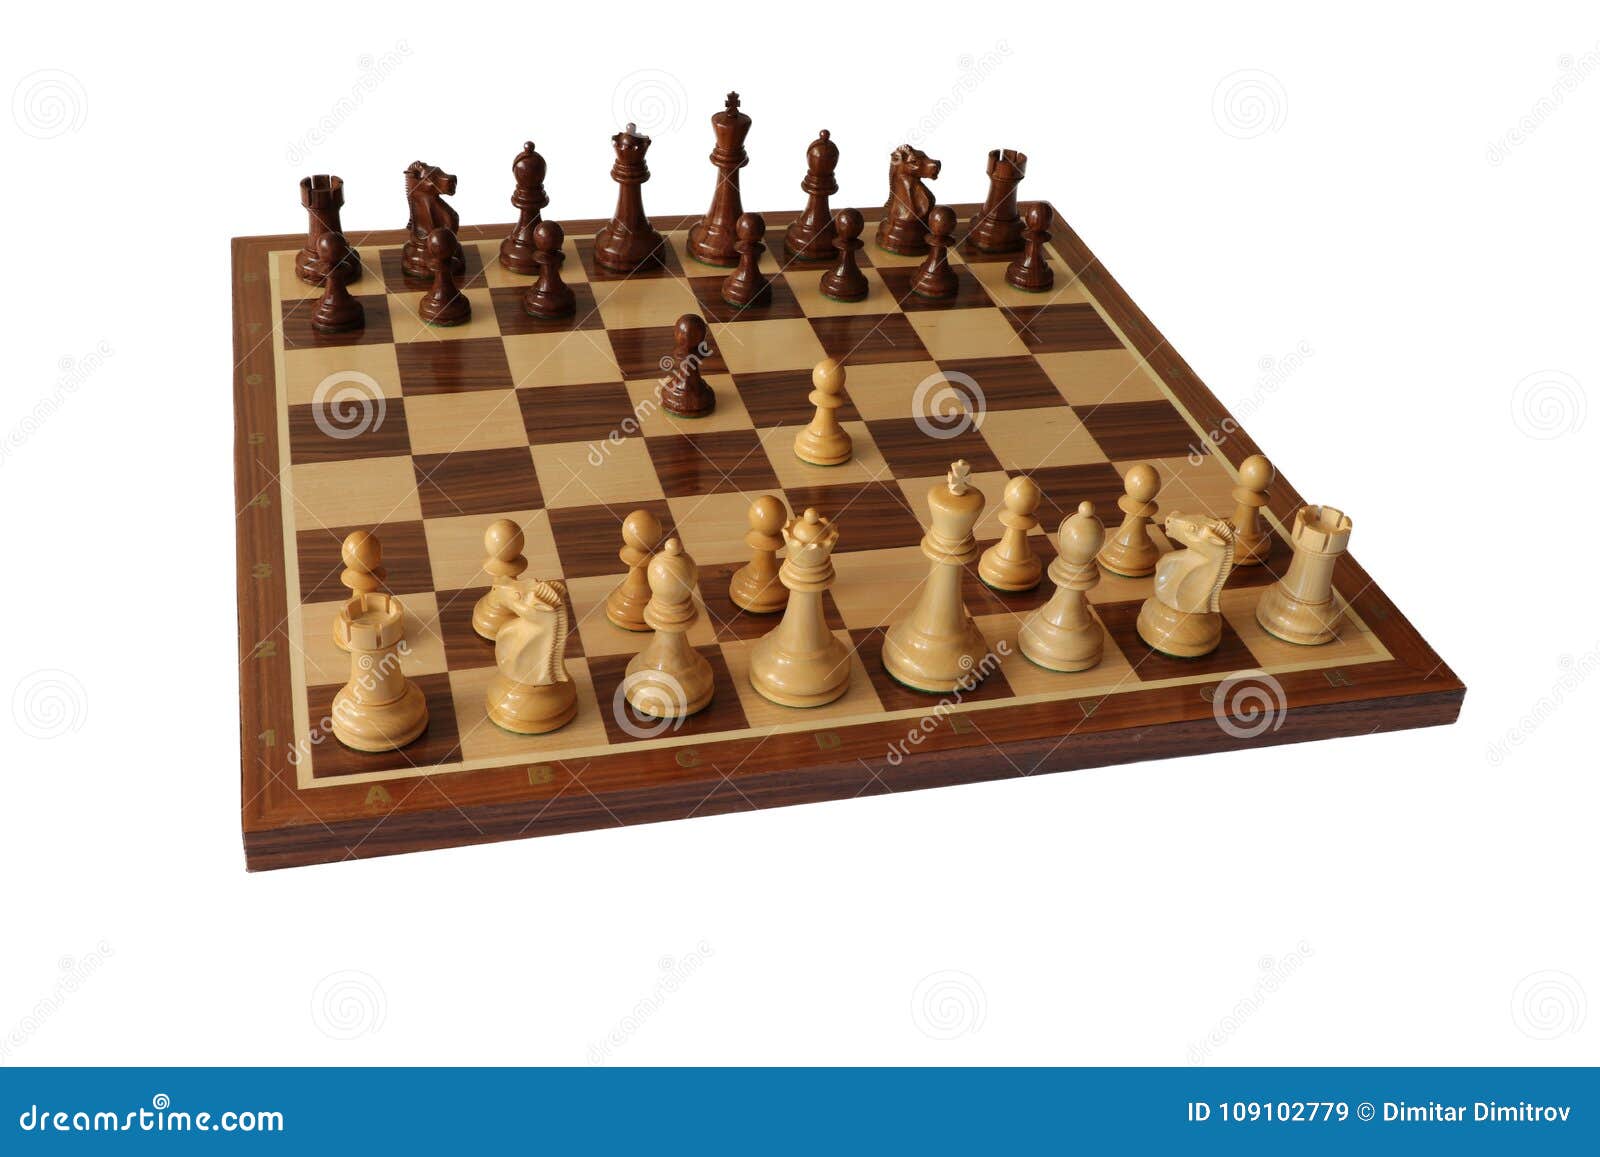 15 - DEFESA ESCANDINAVA e4 d5 - Estratégias de Xadrez 